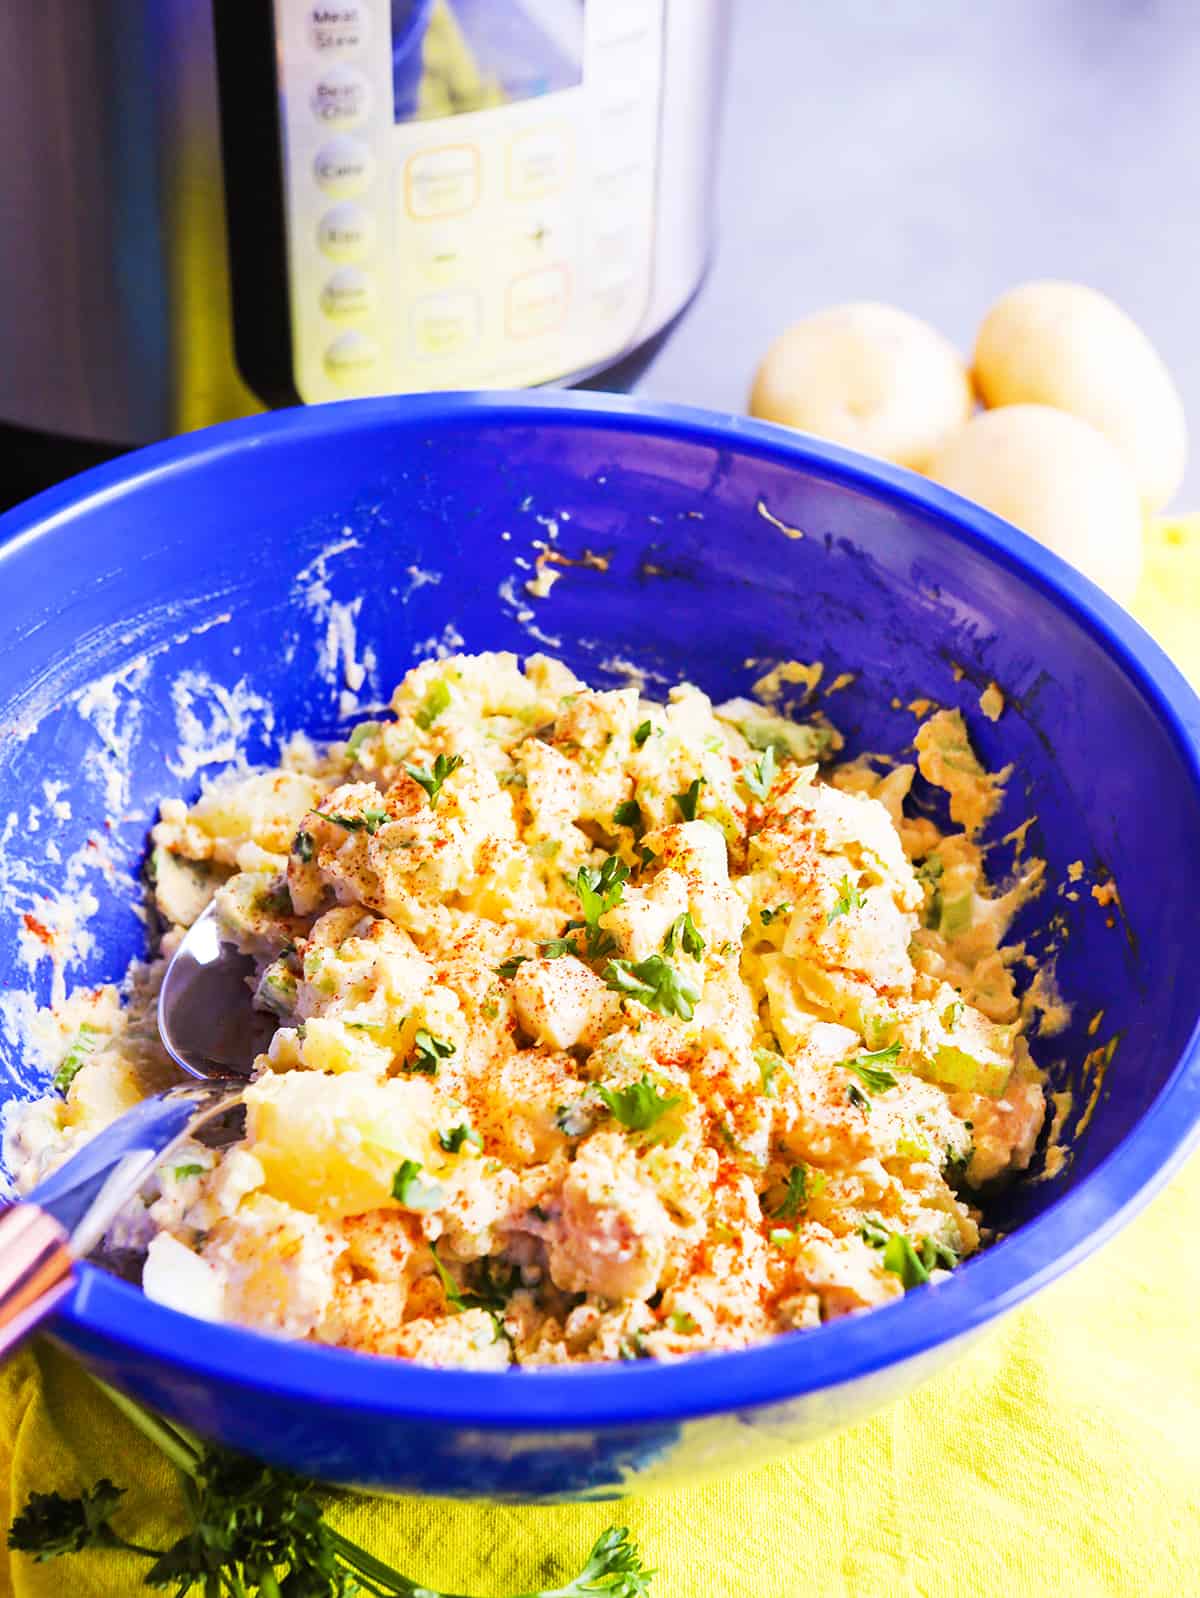 Instant Pot potato salad with eggs next to the bowl.